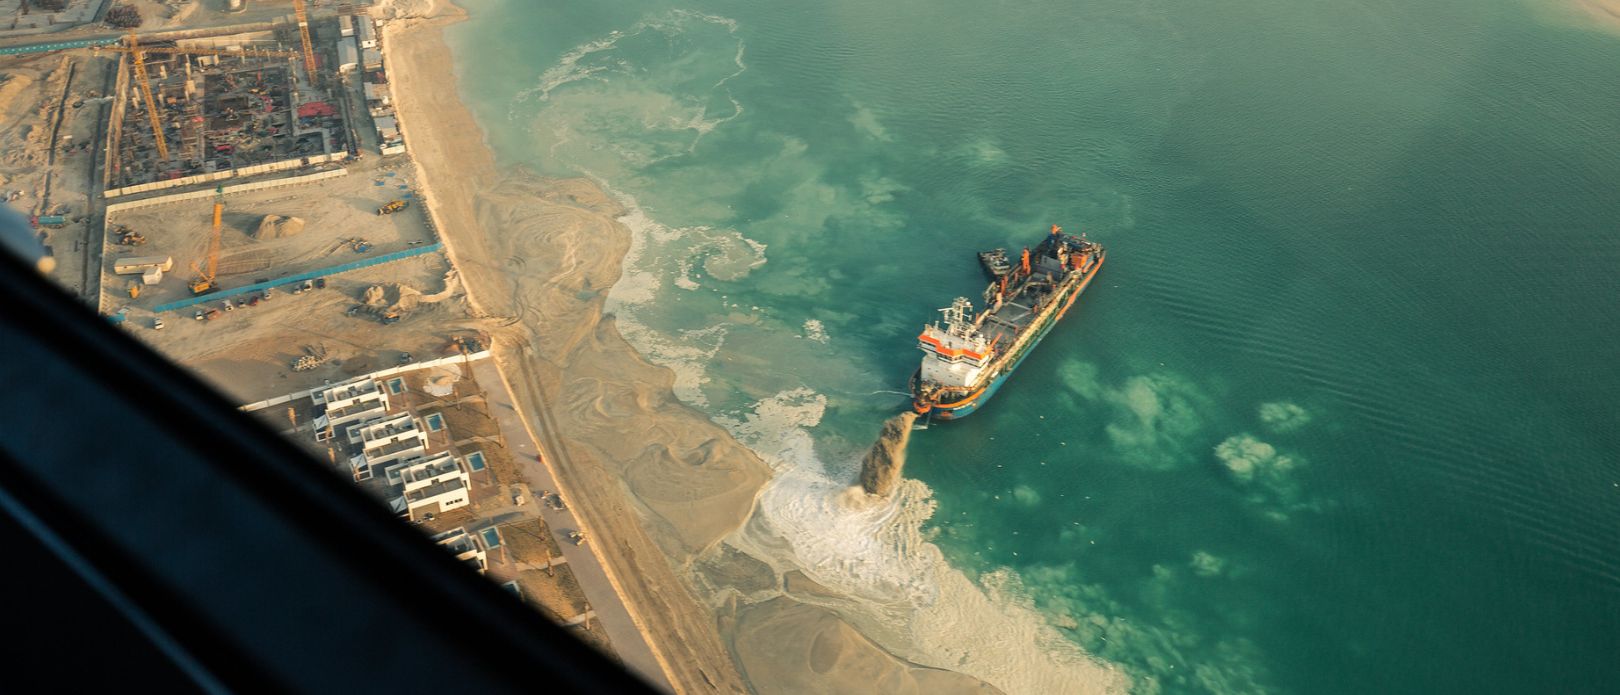 Sand dredging ship working on Palm Jumeirah in Dubai